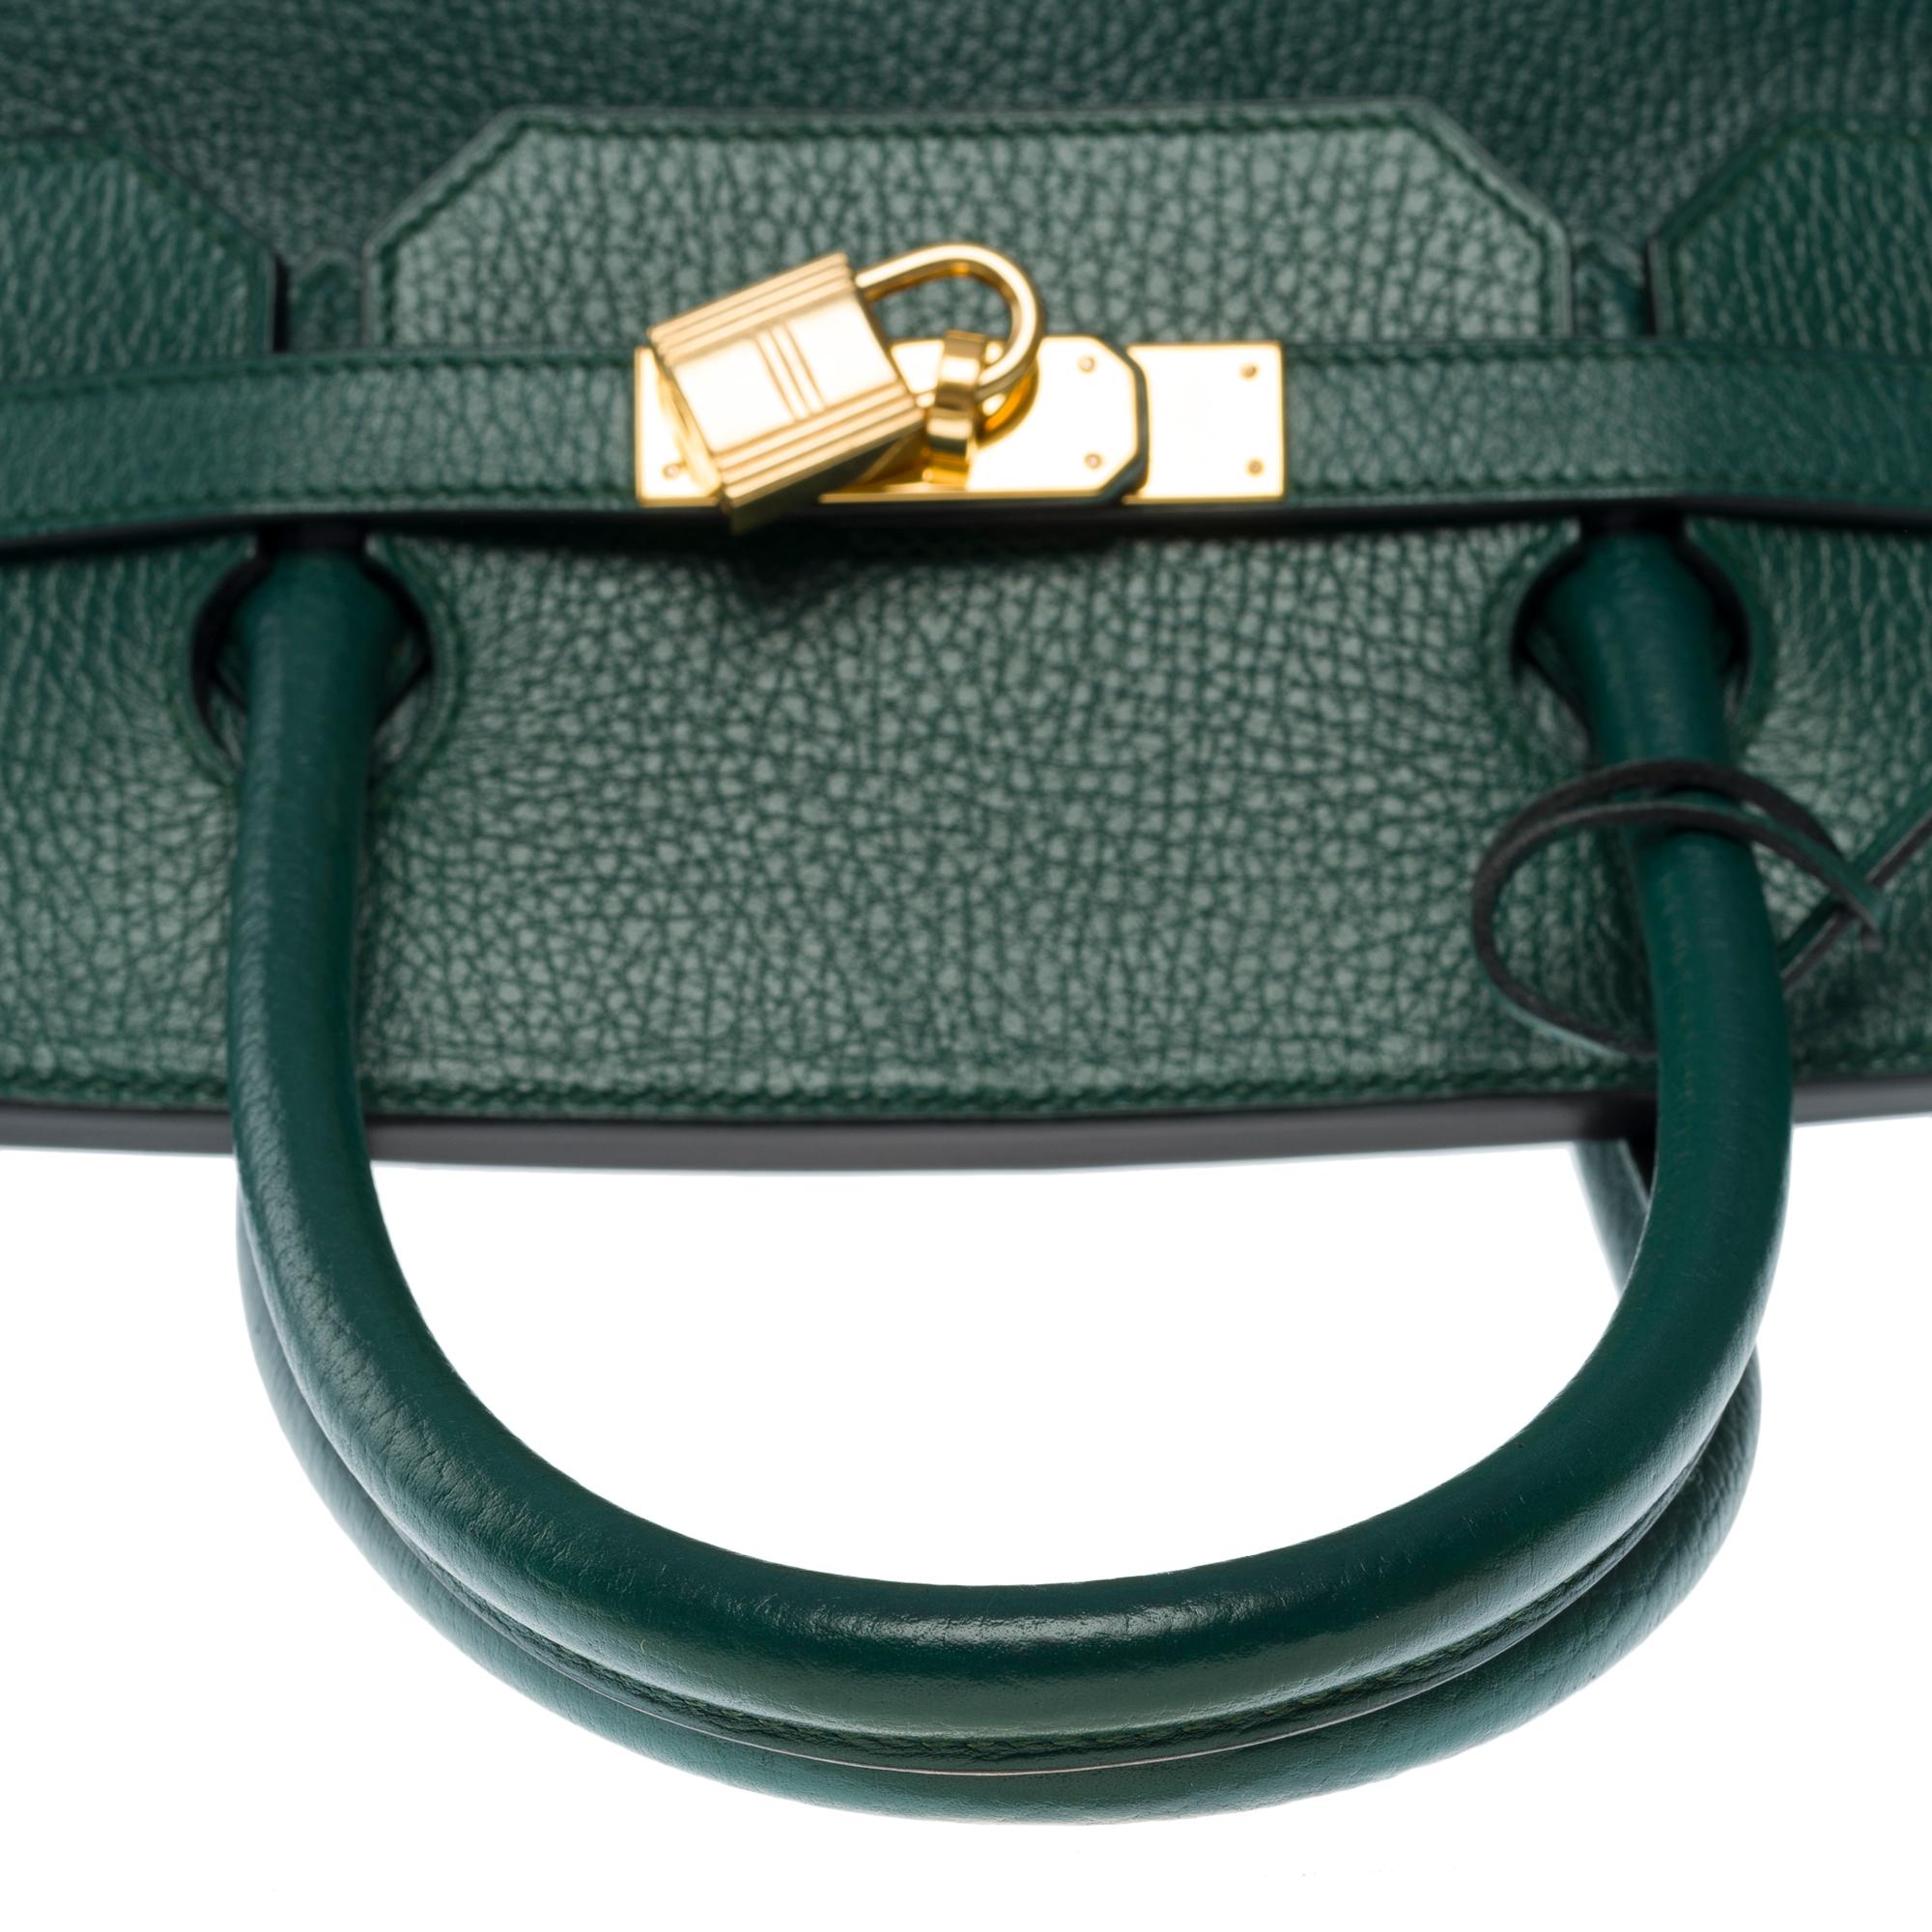 Rare Hermes Birkin 40 handbag in Emerald Green Ardennes Calf leather, GHW 4